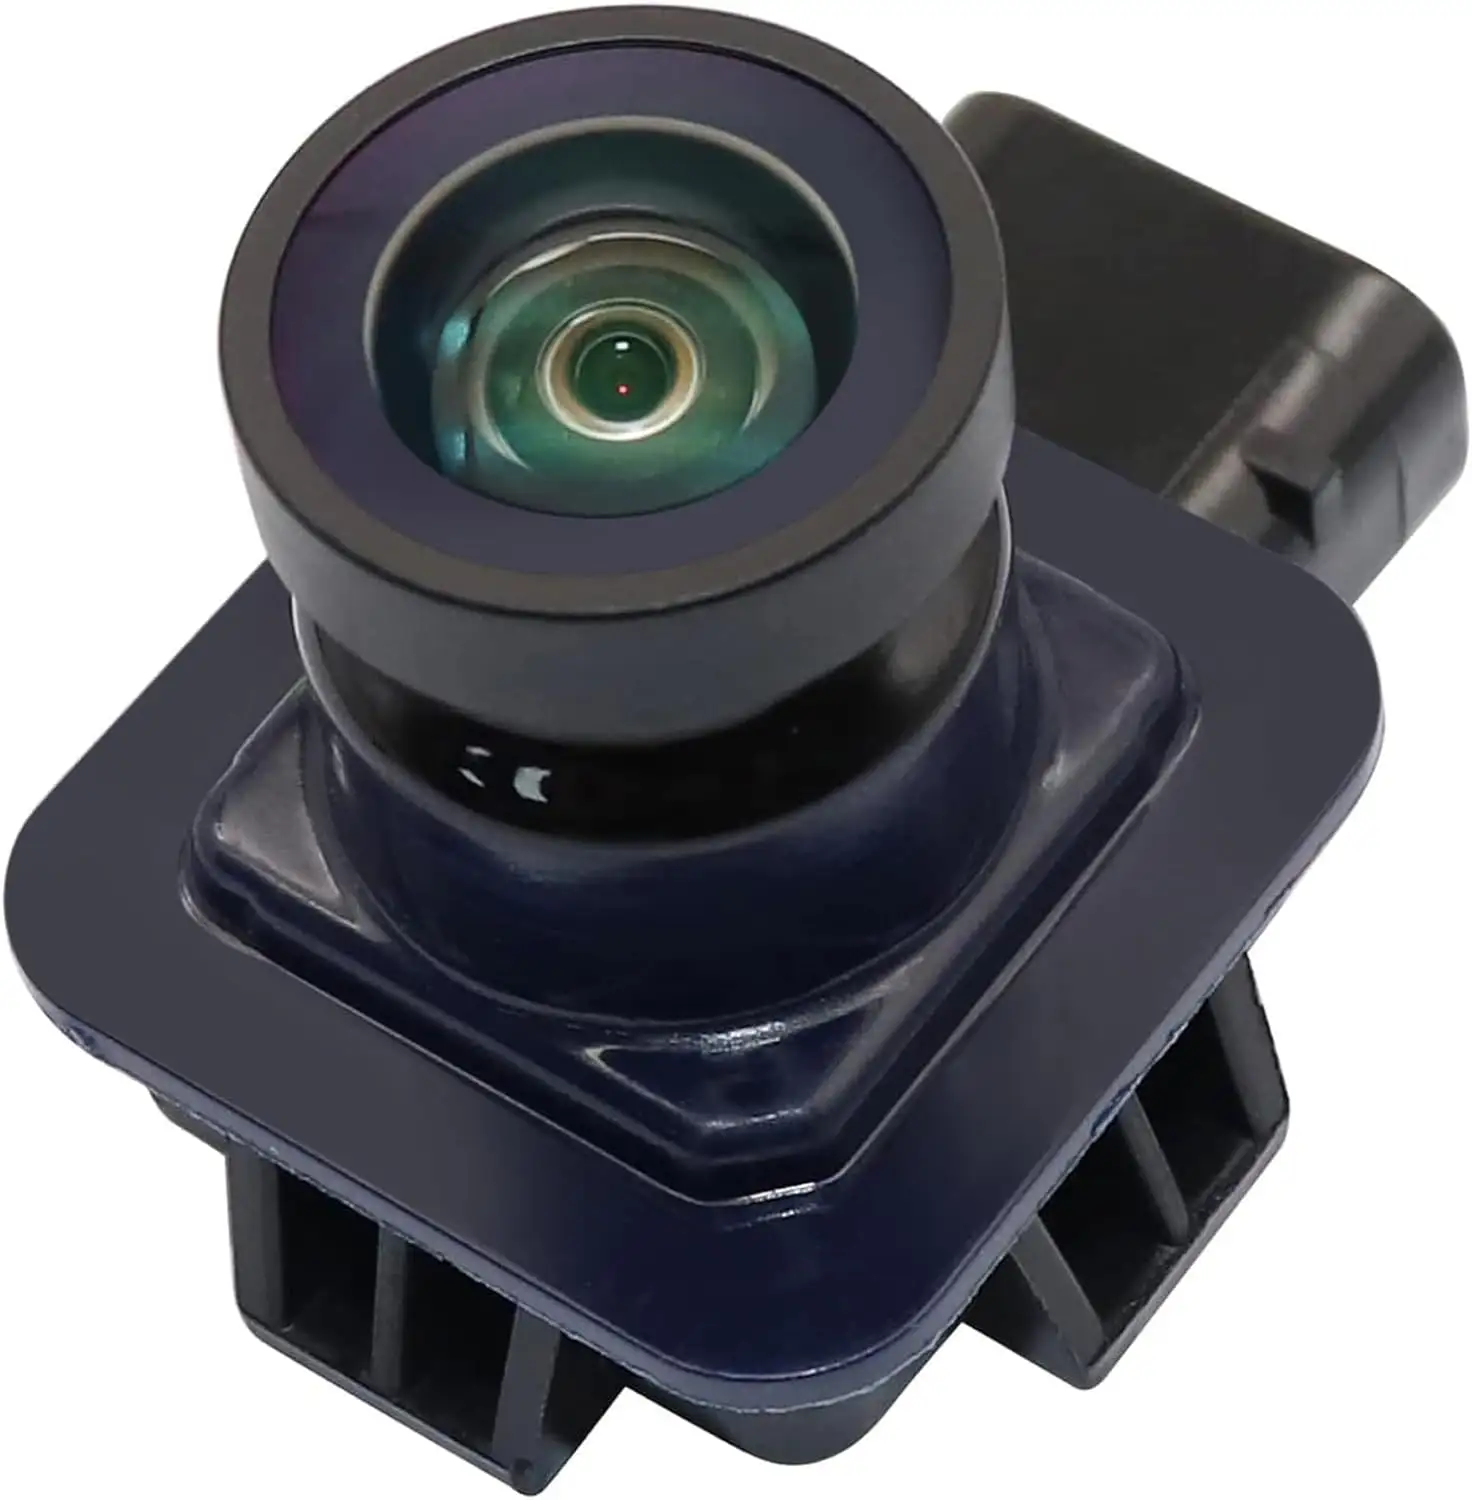 EP5Z19G490A Rear View Camera Back Up Safety Camera for Lincoln MKZ 2013 2014 2015 2016 DP5Z-19G490-A DP5Z-19G490-A EP5Z-19G490-A